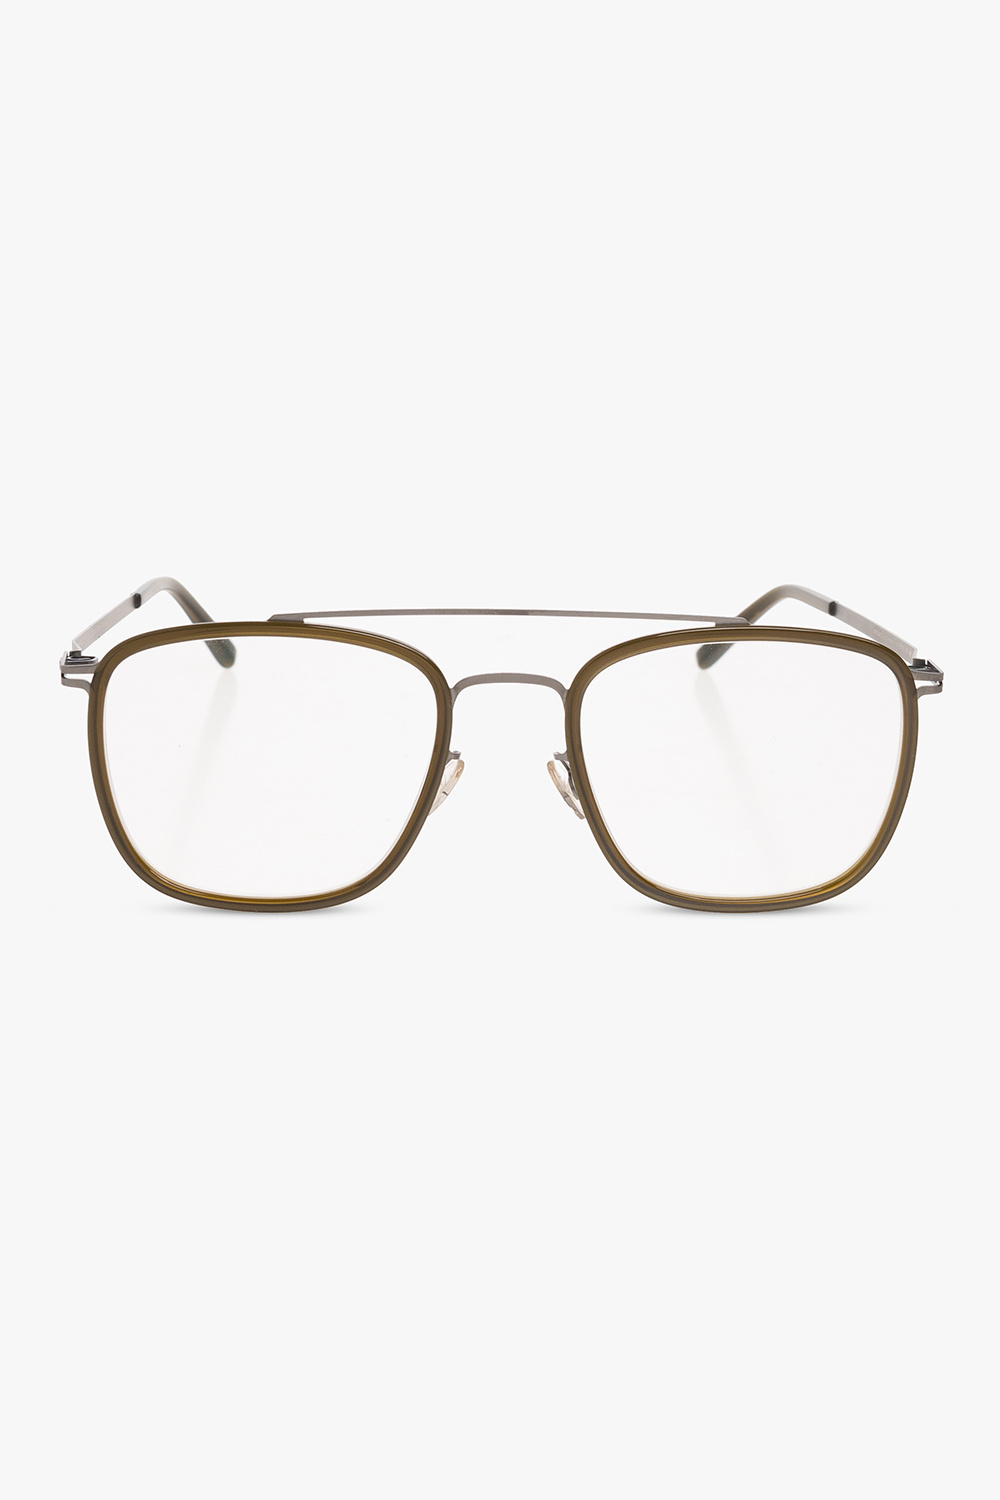 Mykita ‘Jeppe’ optical glasses